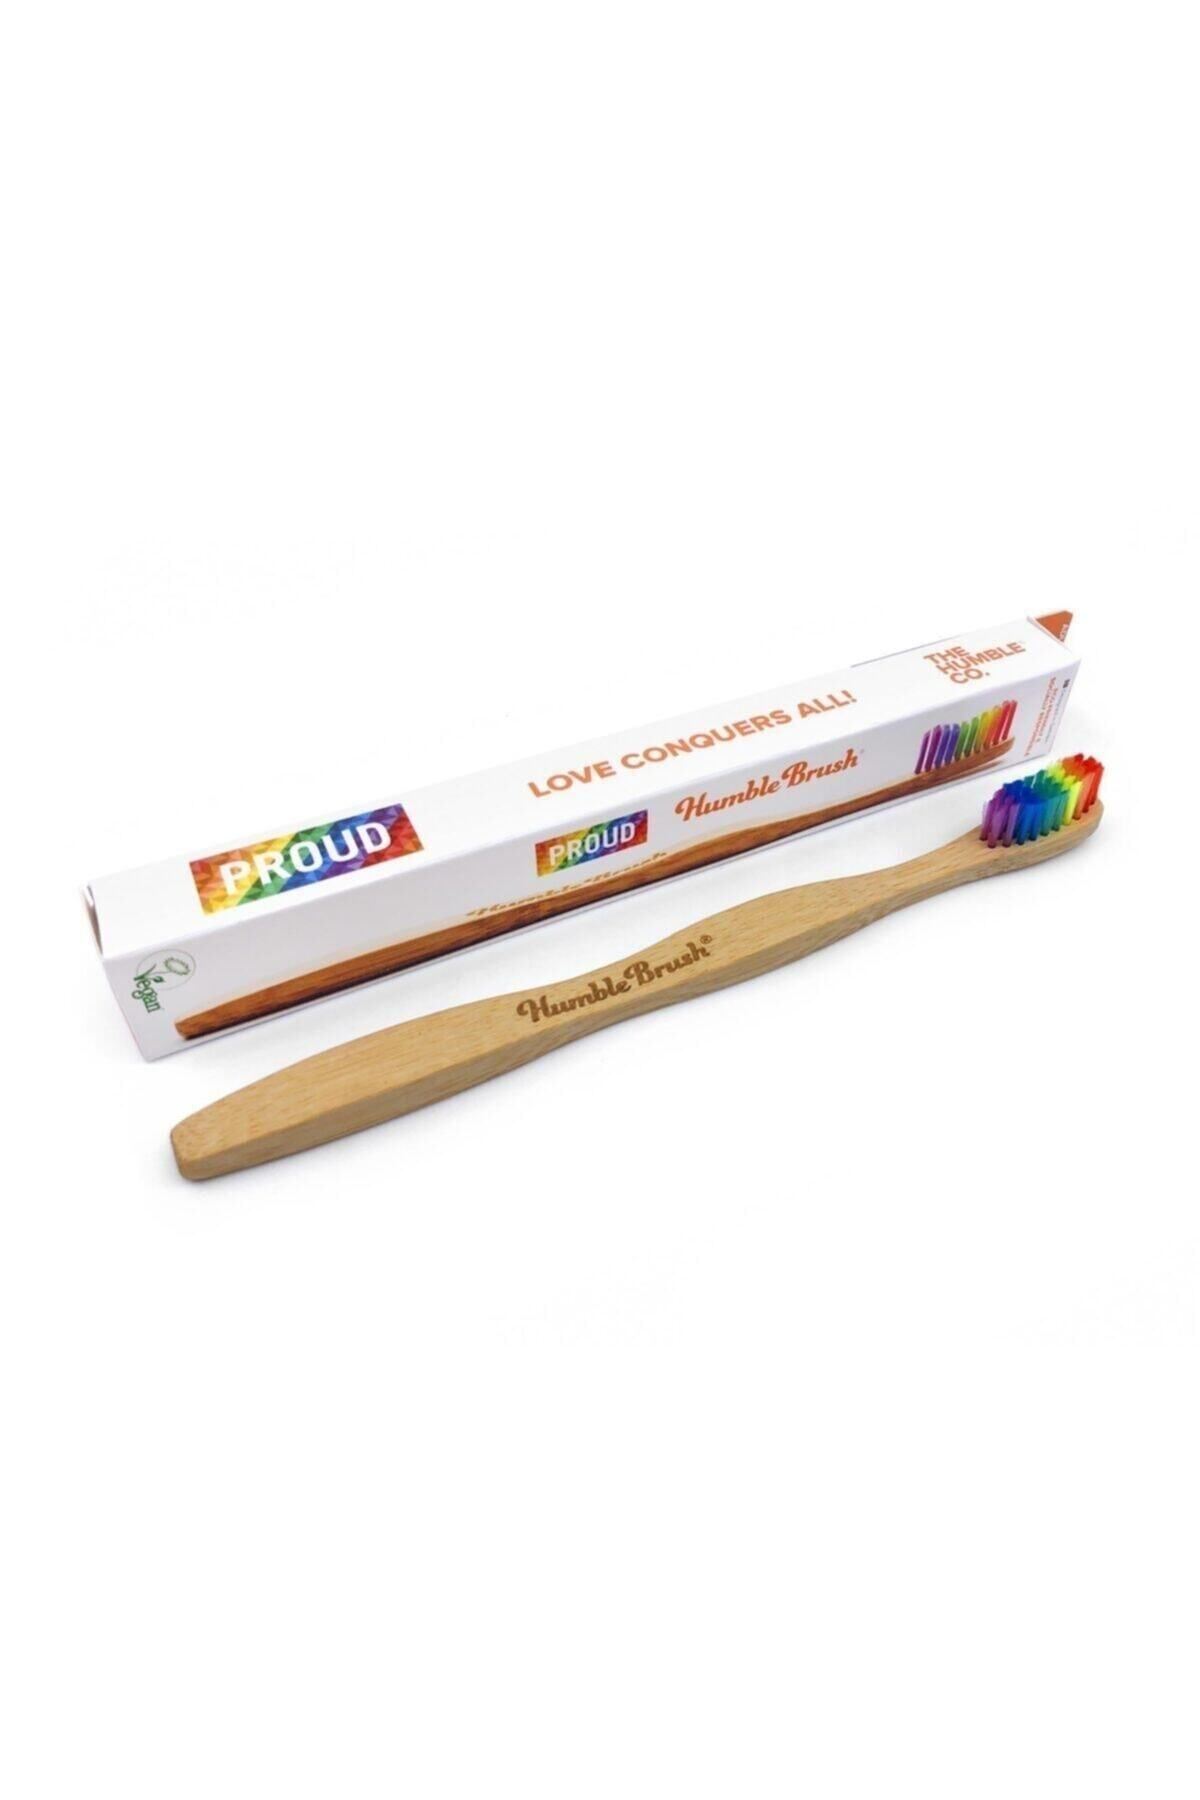 Humble Brush Adult Medium Rainbow Toothbrush